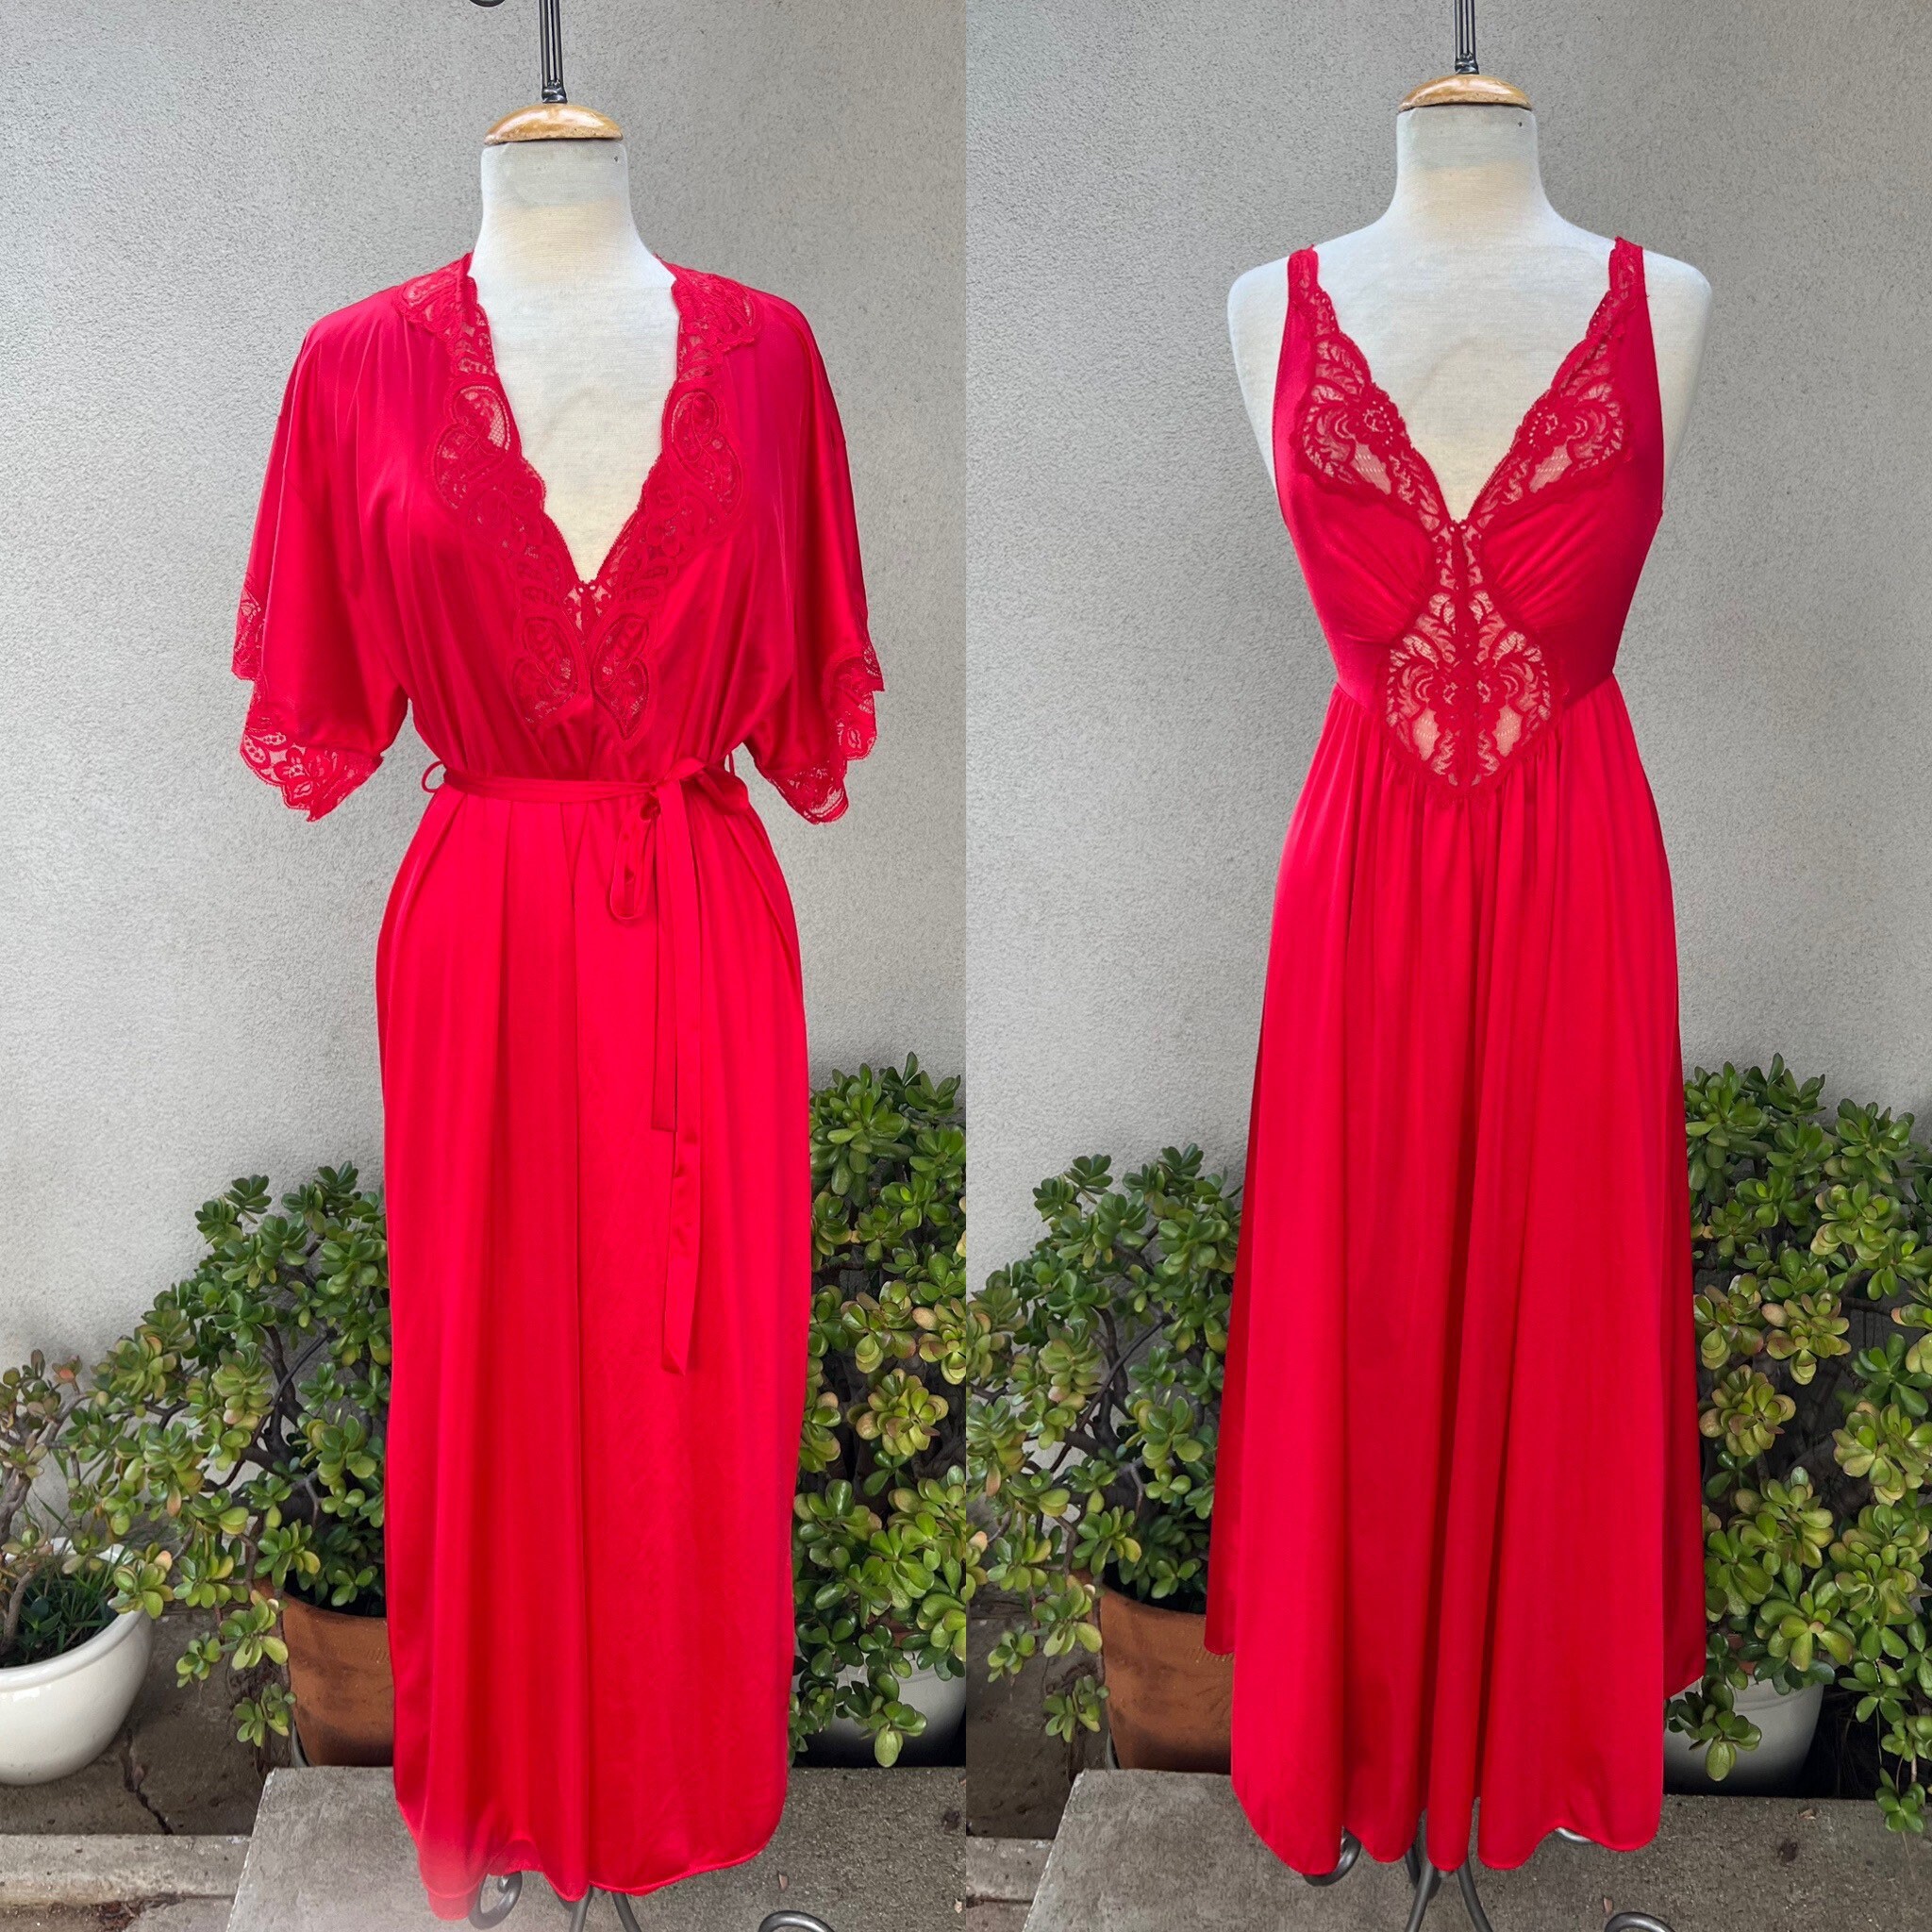 Vintage peignoir lingerie set robe gown hot red nylon by Olga size S/M Lace trim 